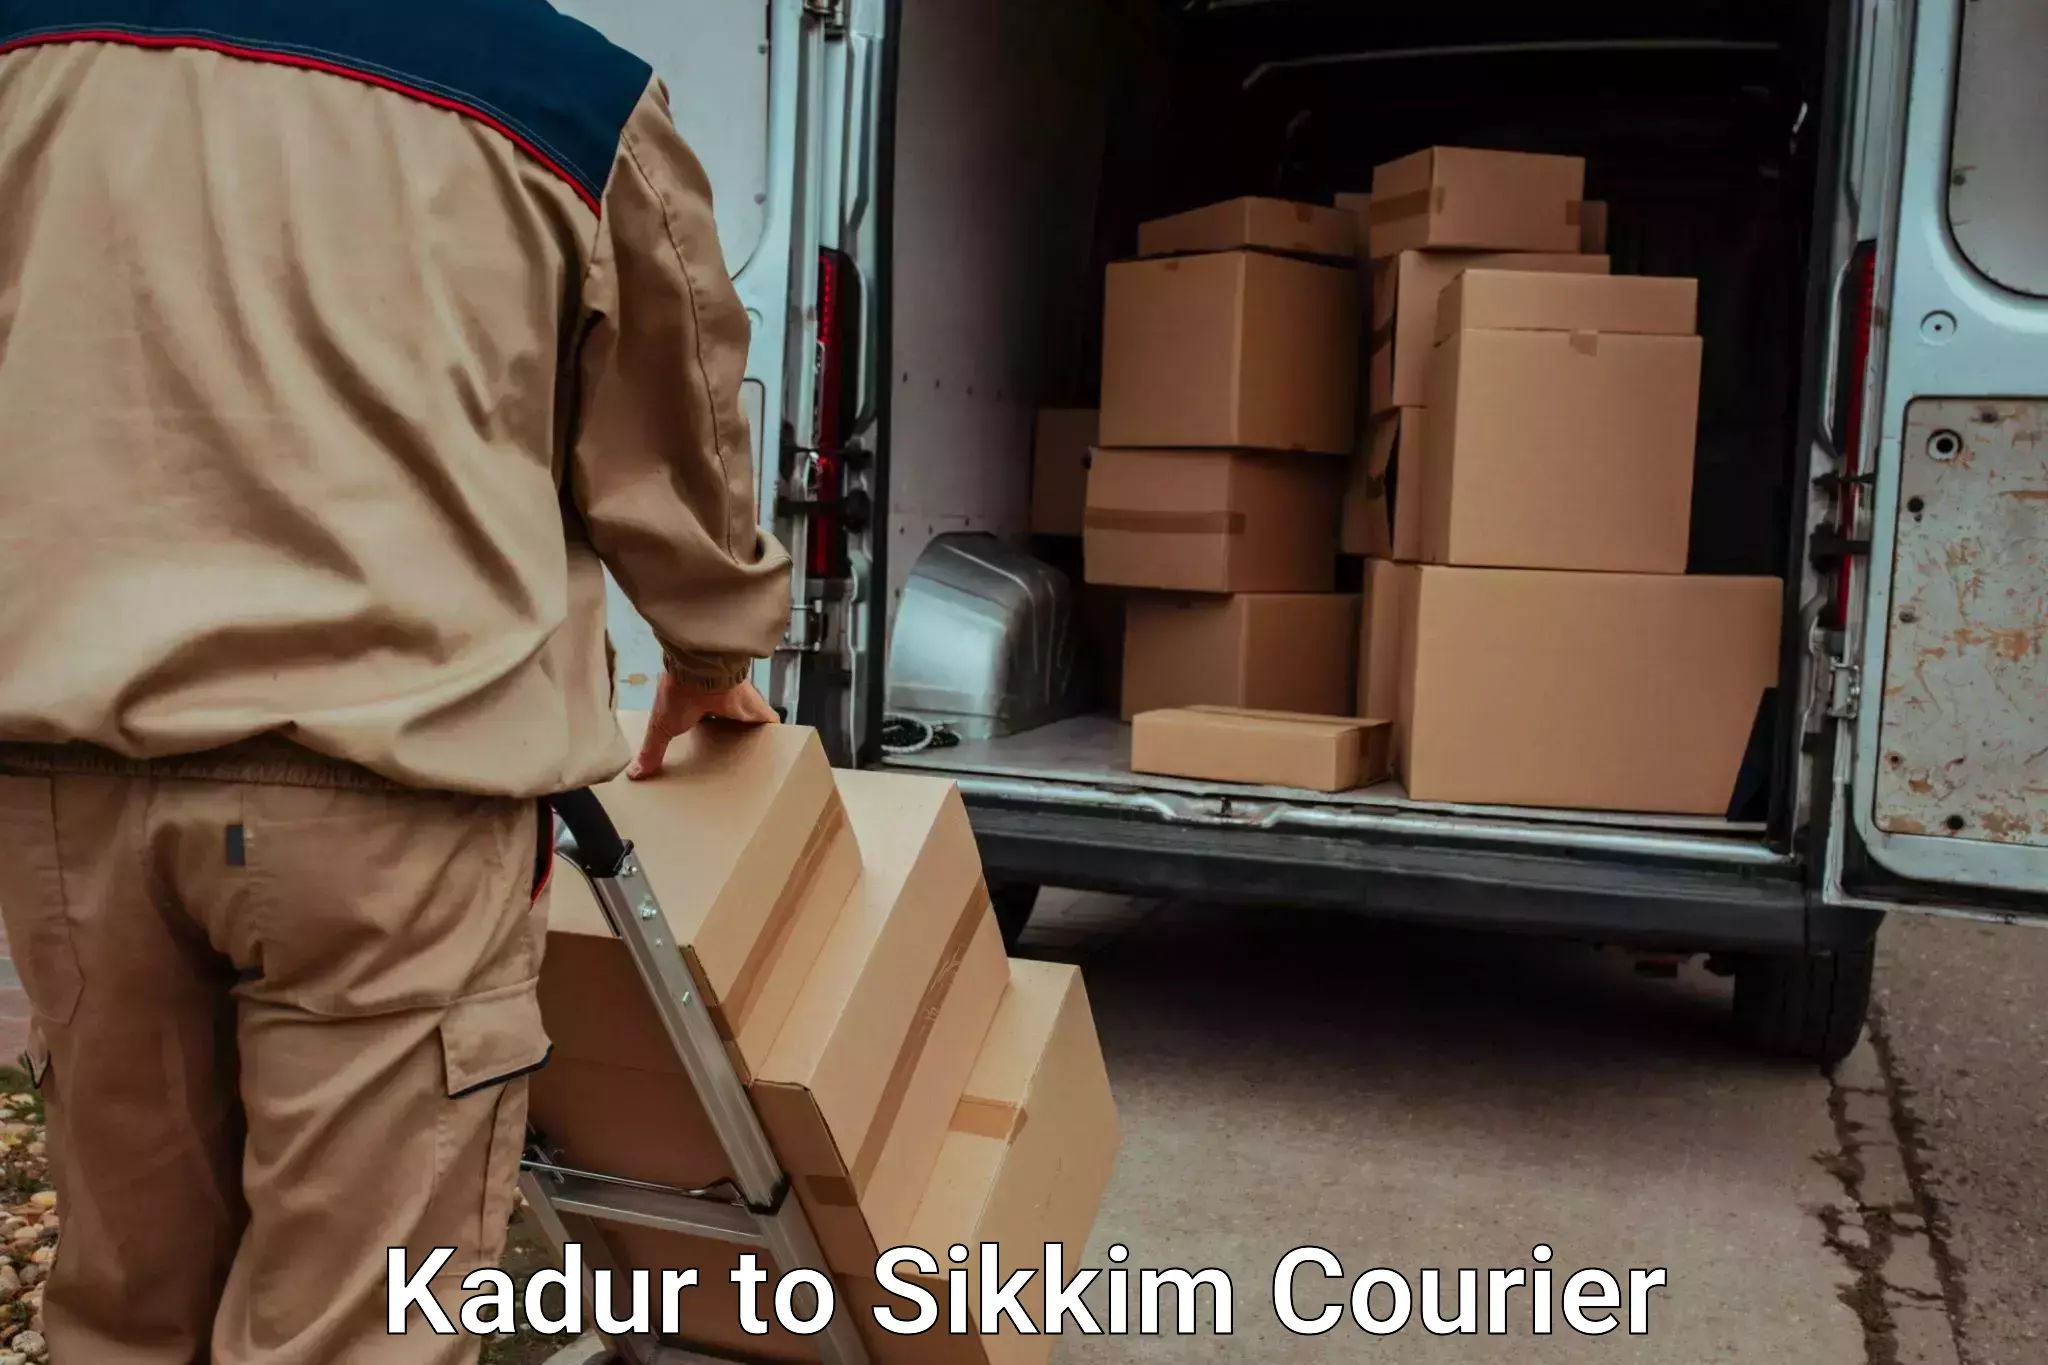 Urgent luggage shipment in Kadur to Pelling